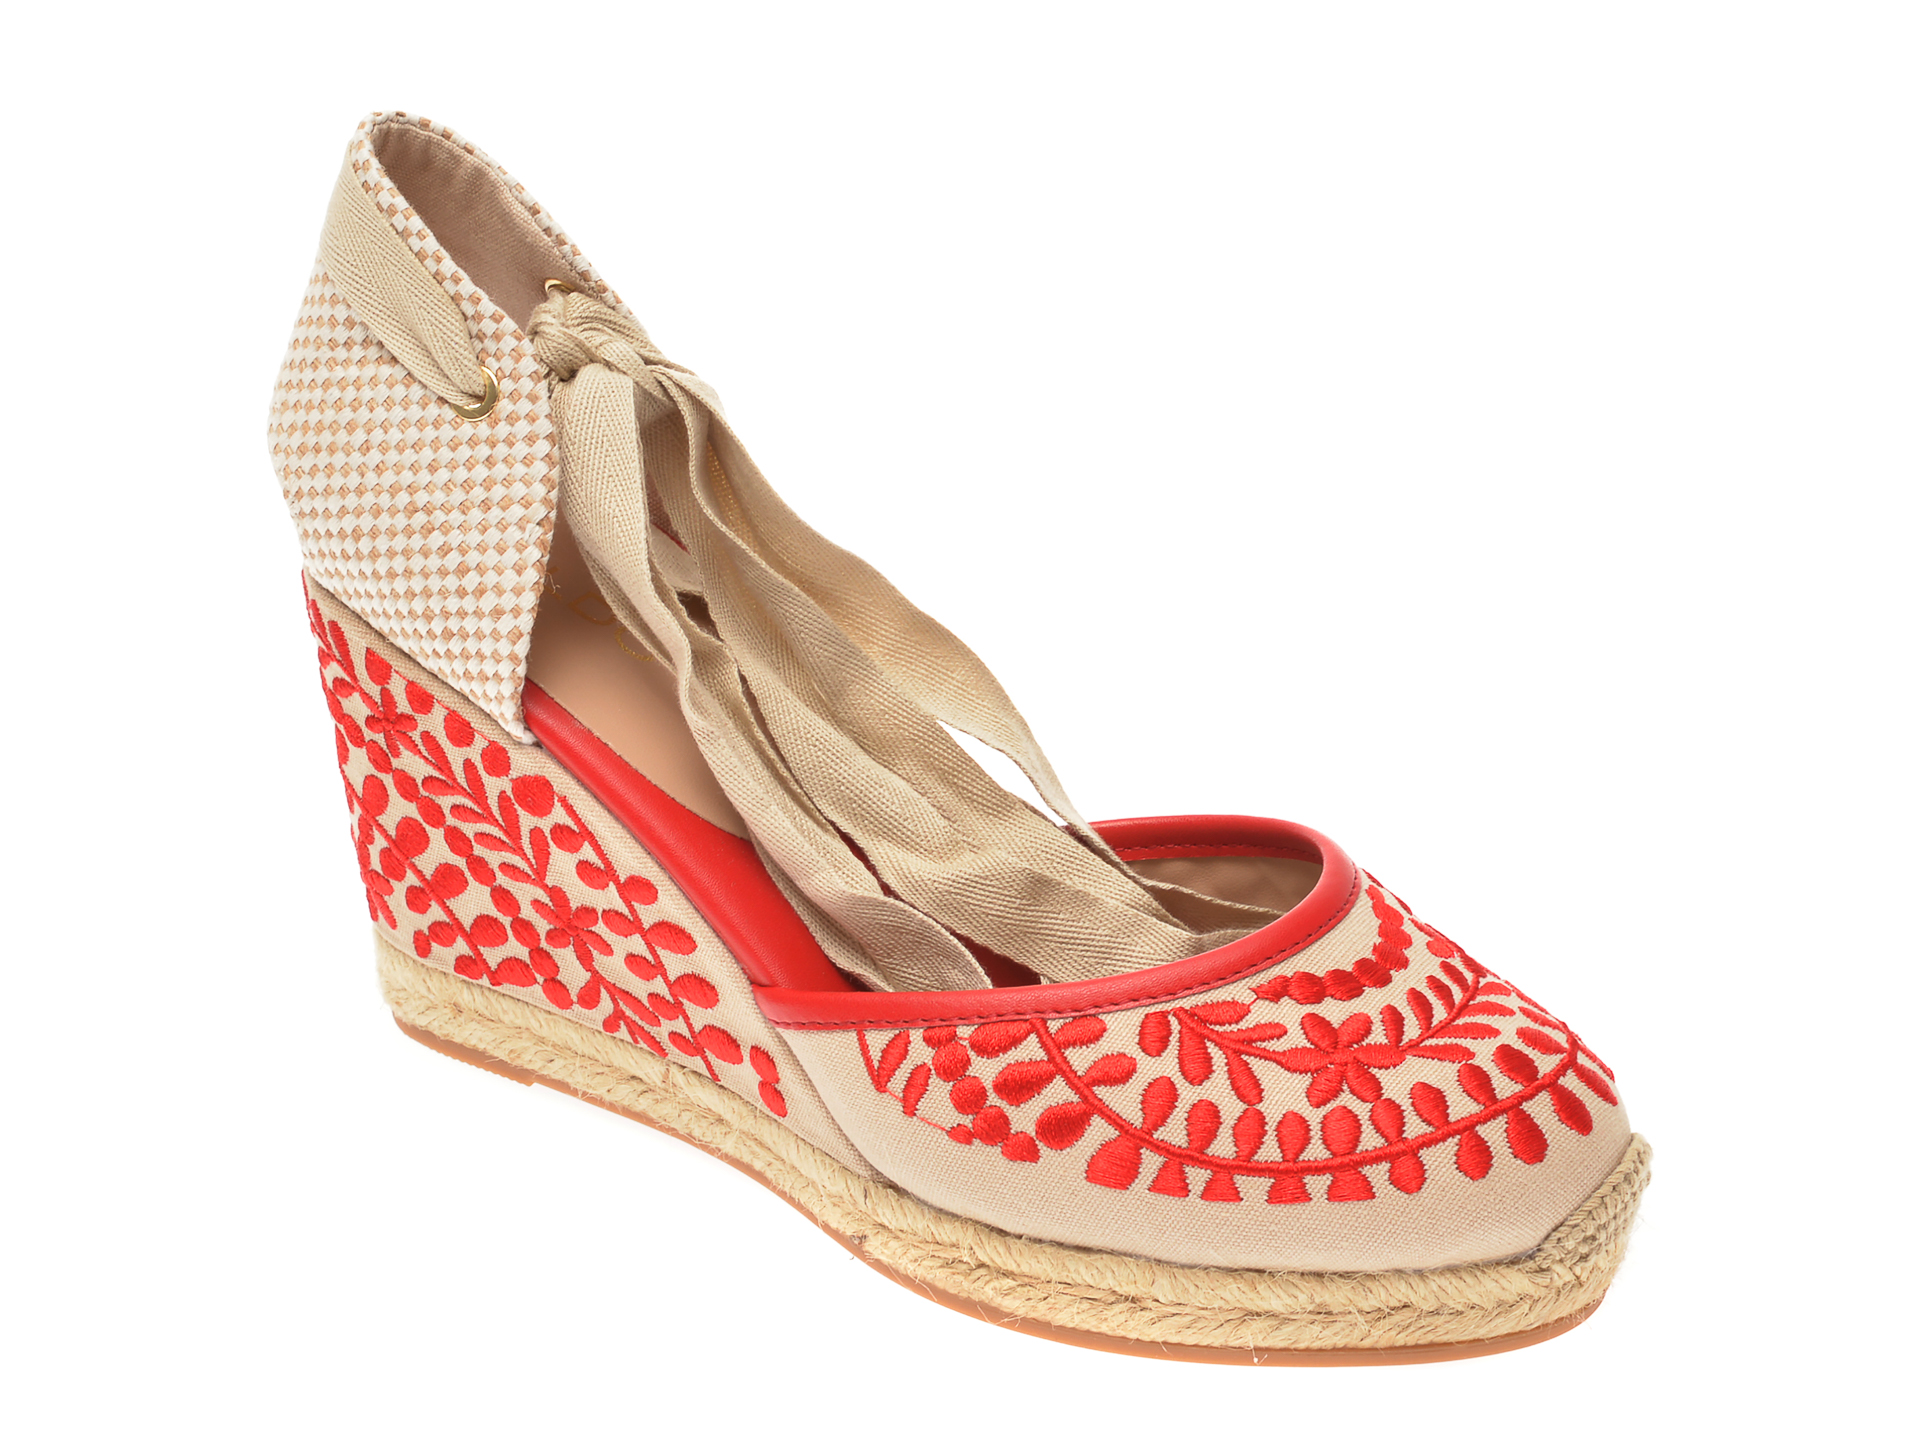 Pantofi ALDO rosii, Muschino600, din material textil